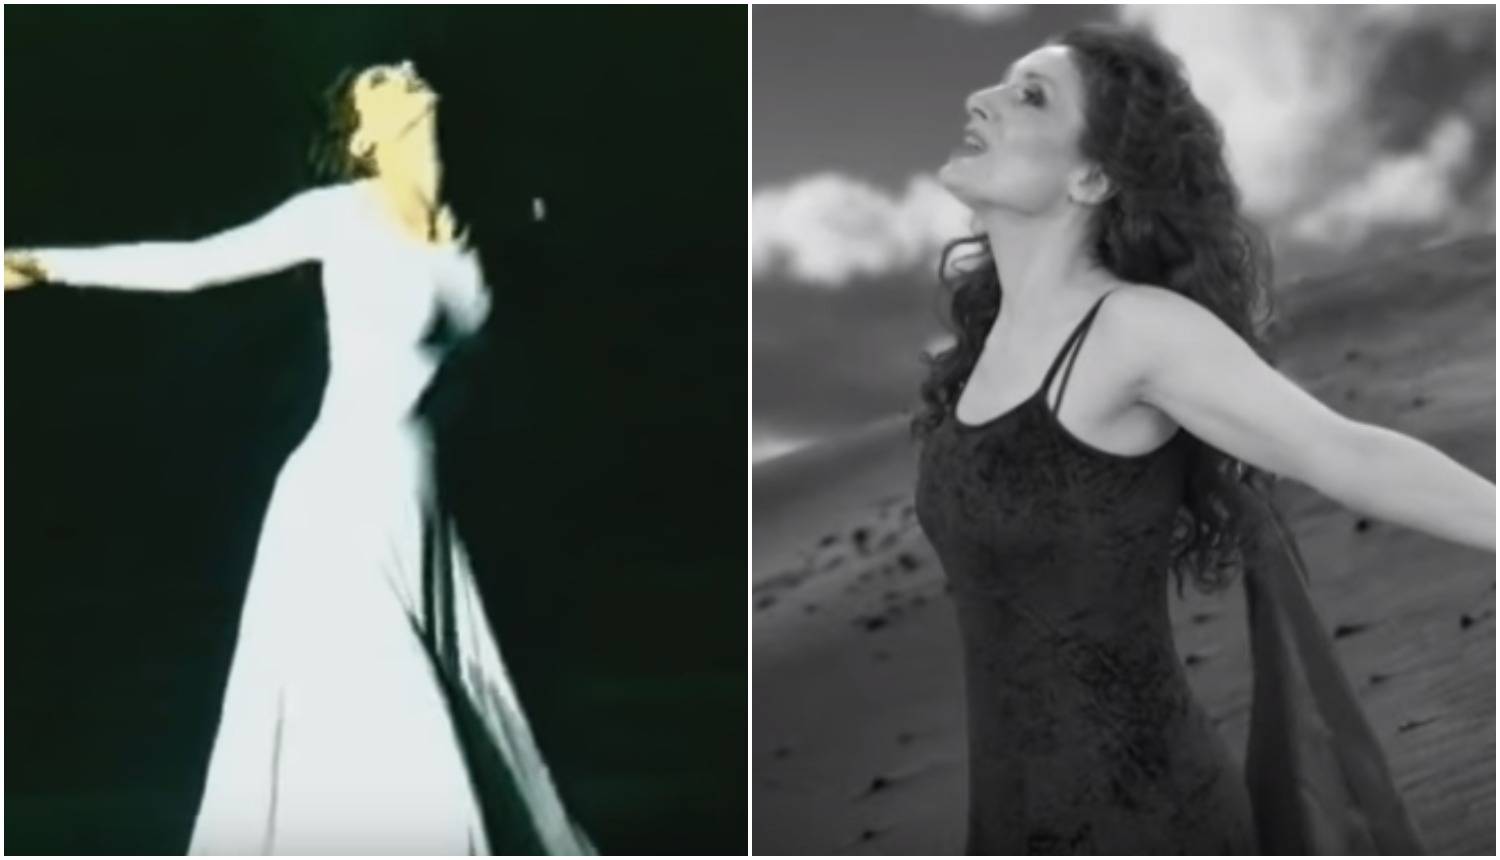 Doris objavila spot nakon deset godina: 'Ista Marija Magdalena'